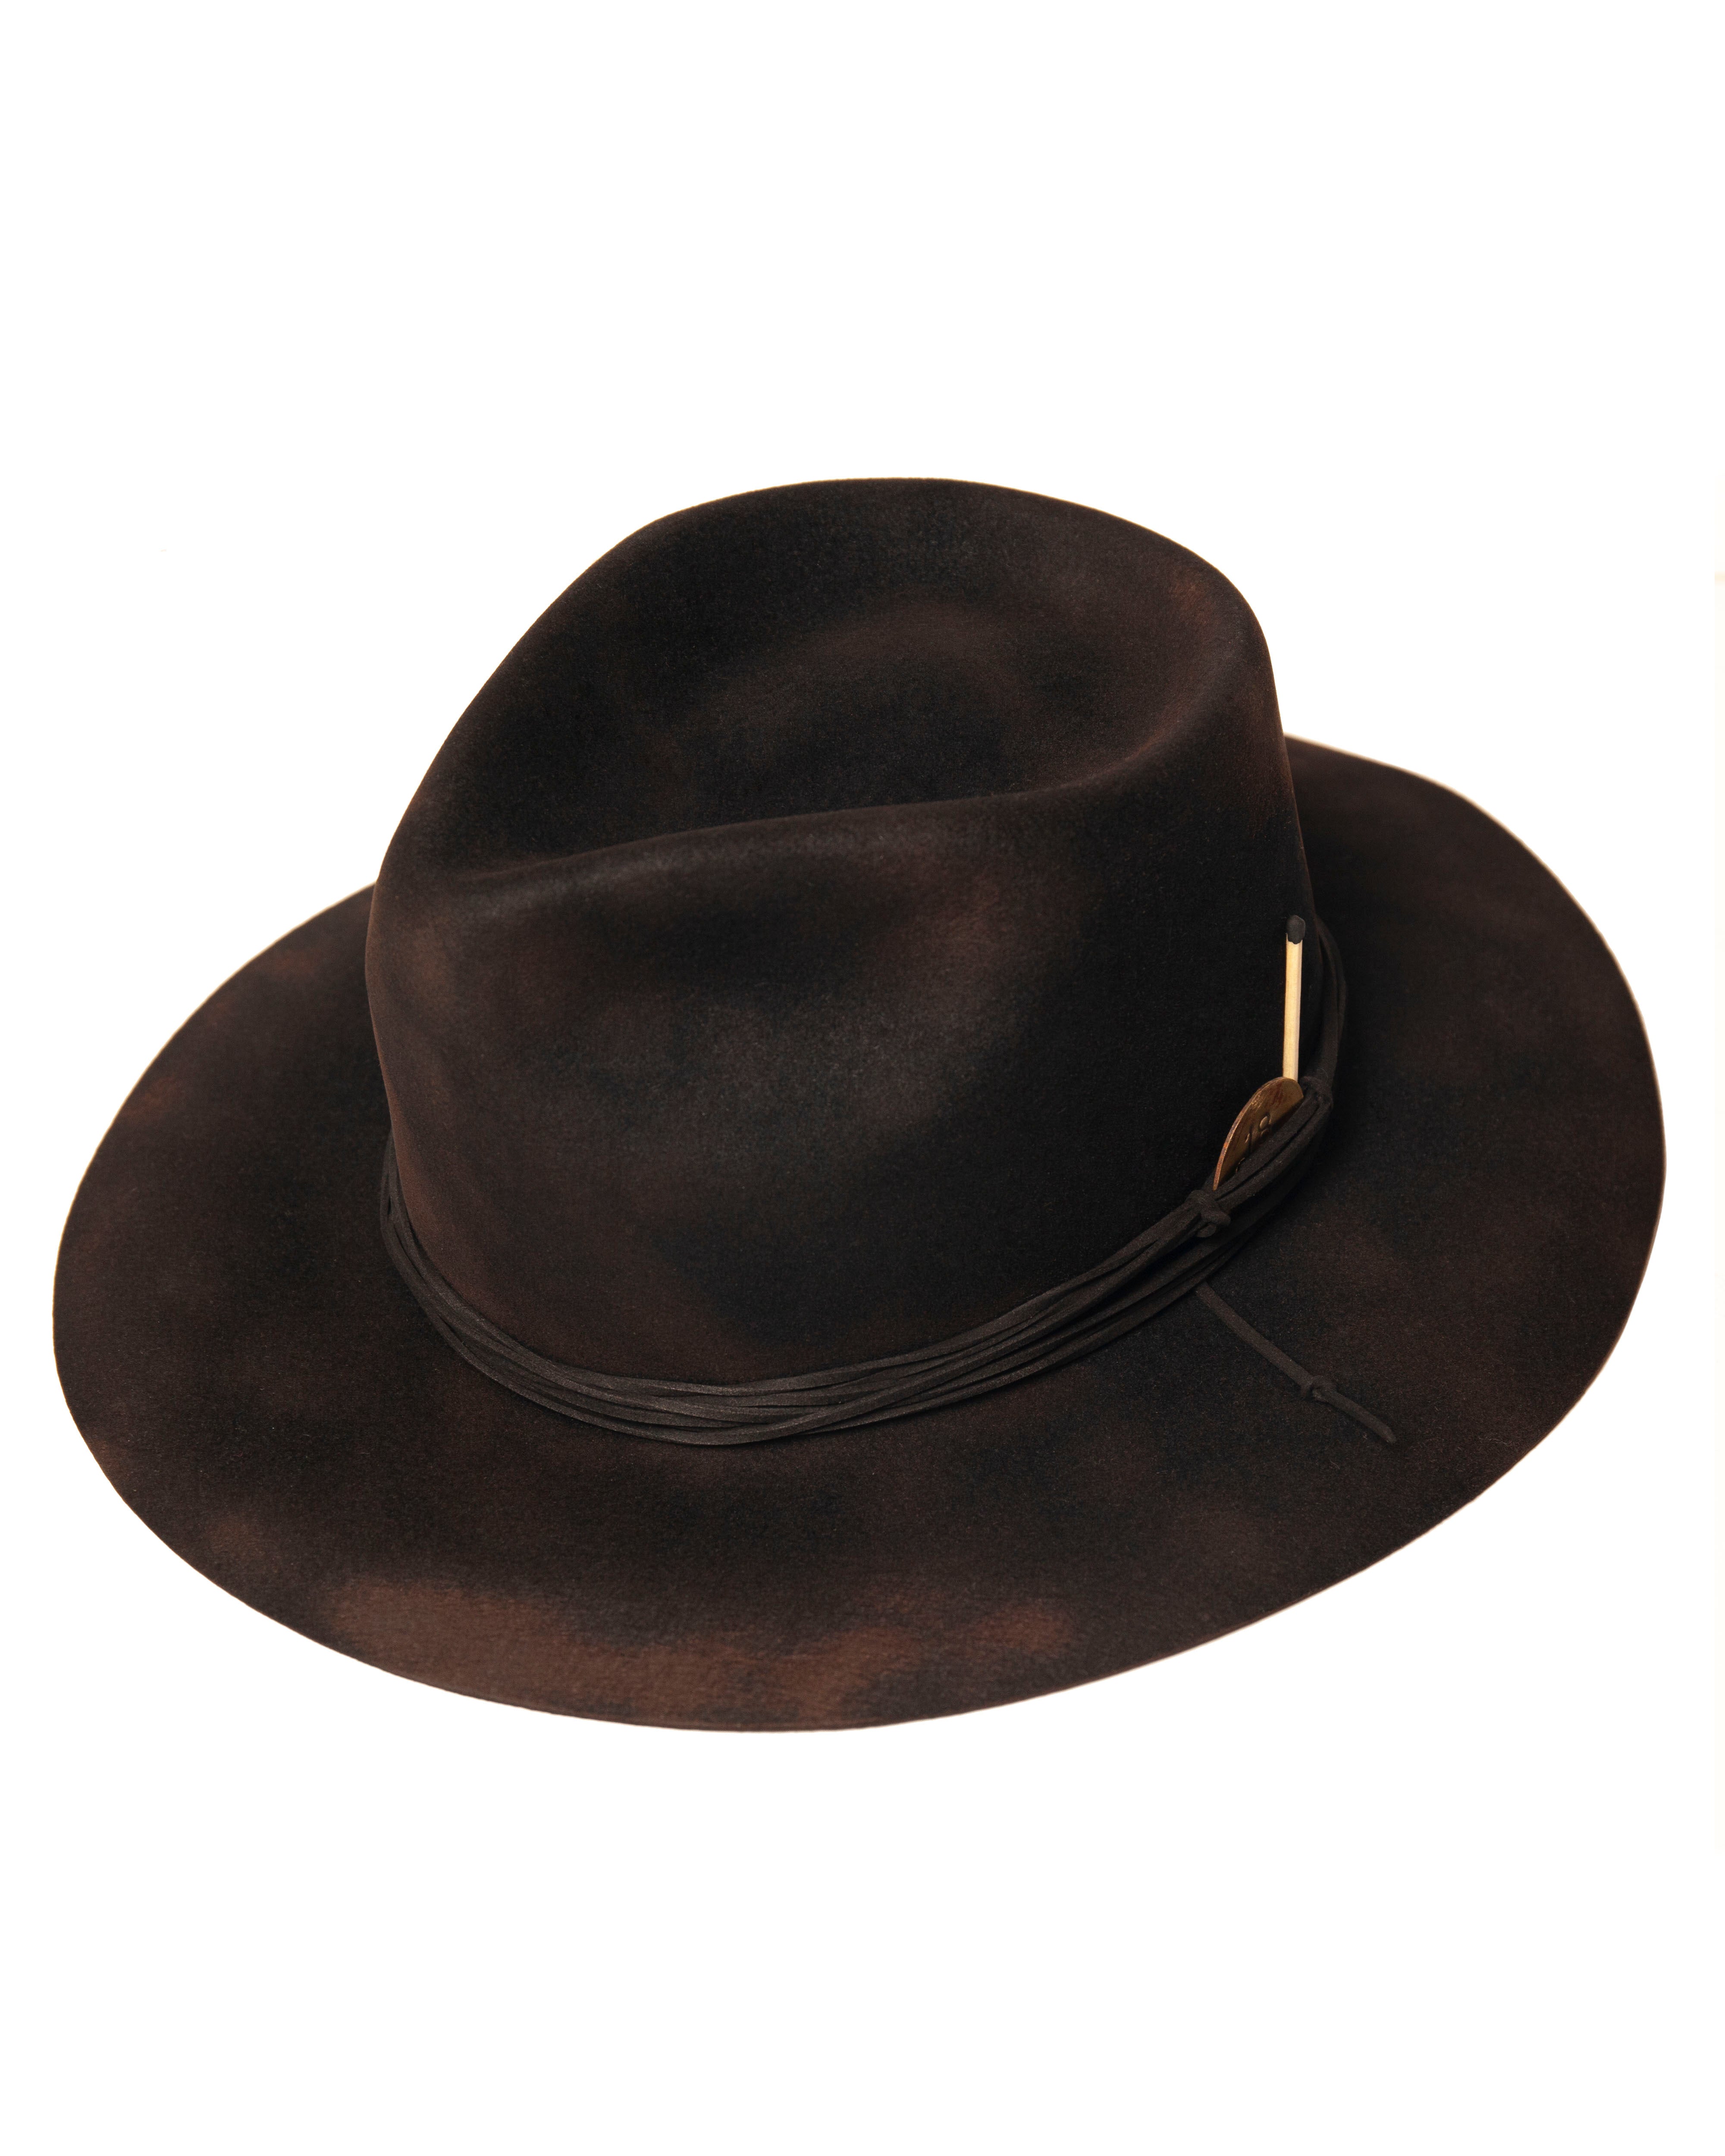 The Jackson Hat